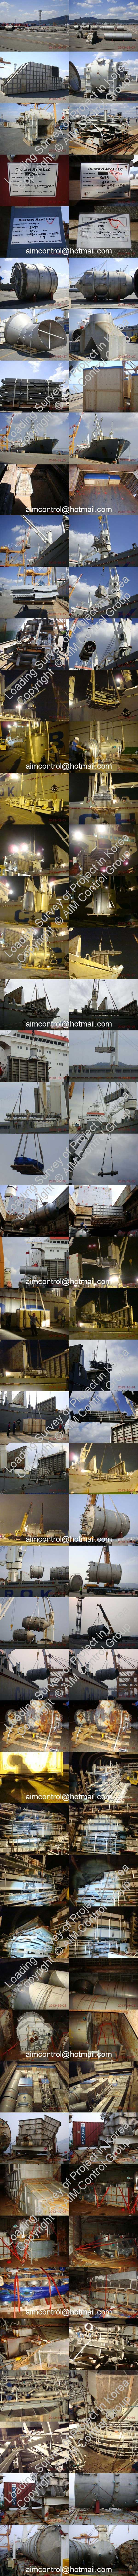 Heavy_lift_project_cargo_inspection_in_Korea - - AIM_Control_marine_warranty_surveyor